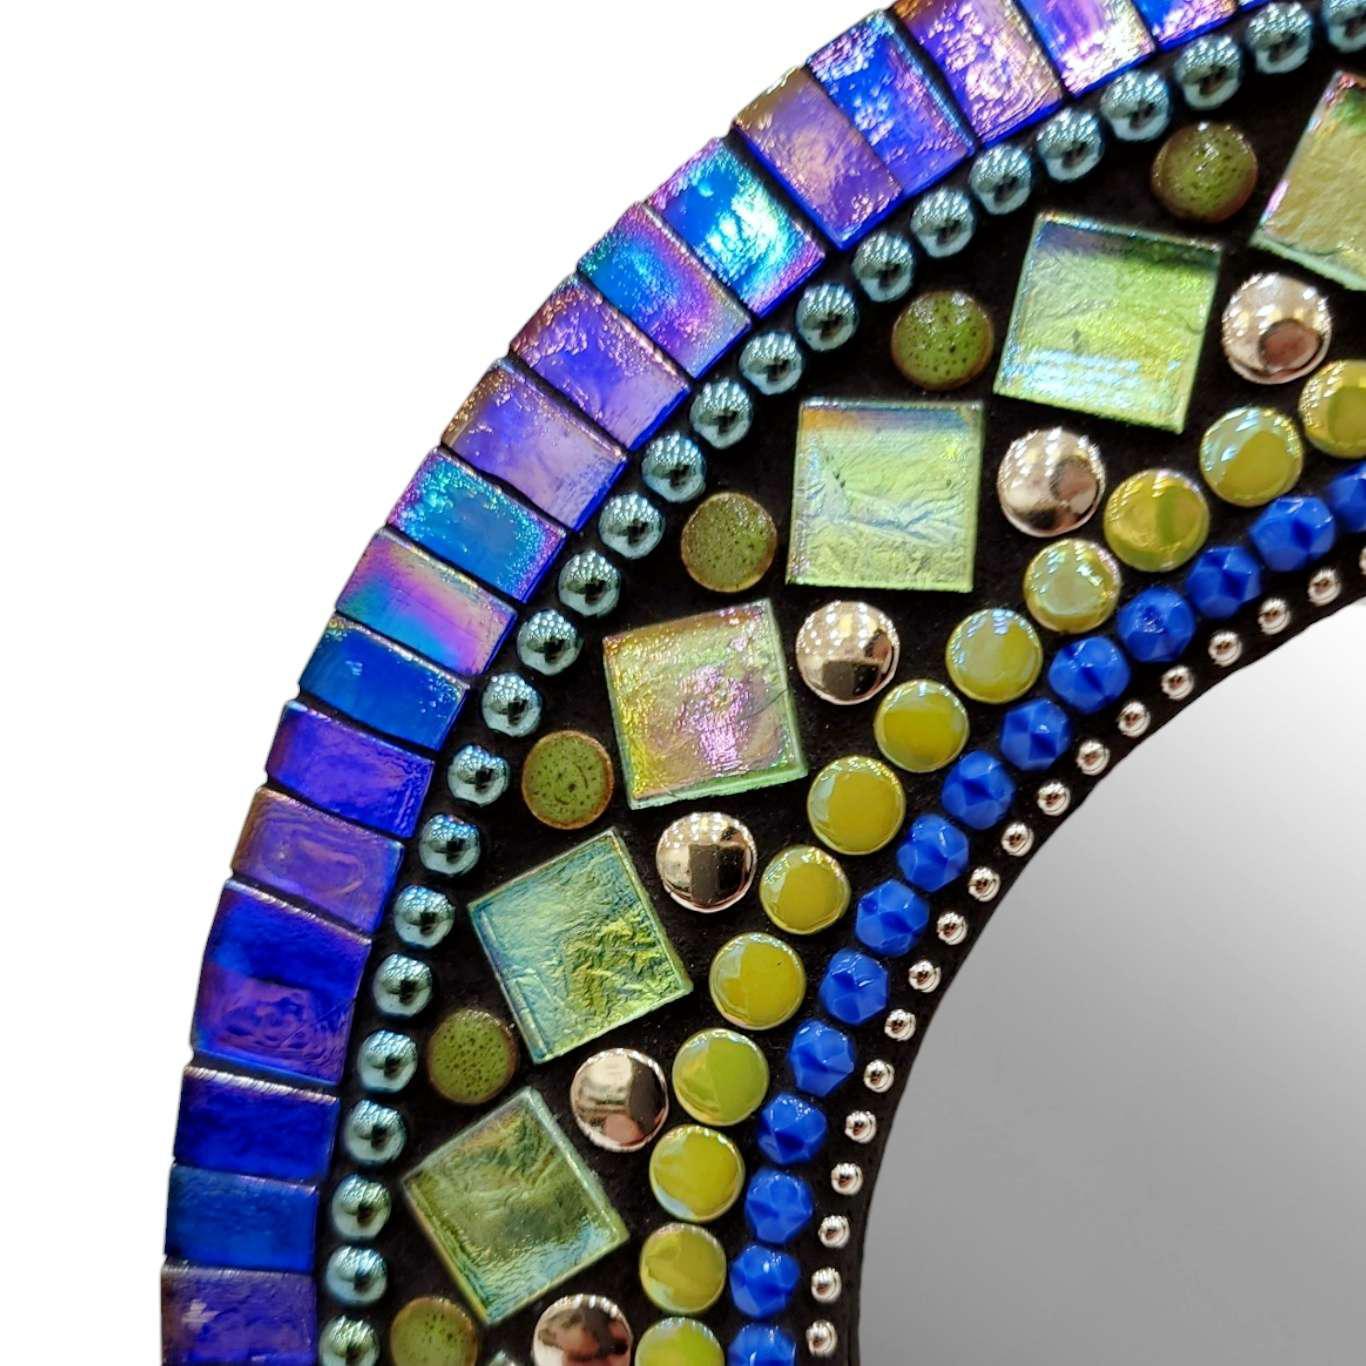 Mosaic Mirror - 10in Round in Atlantis by Zetamari Mosaic Artworks